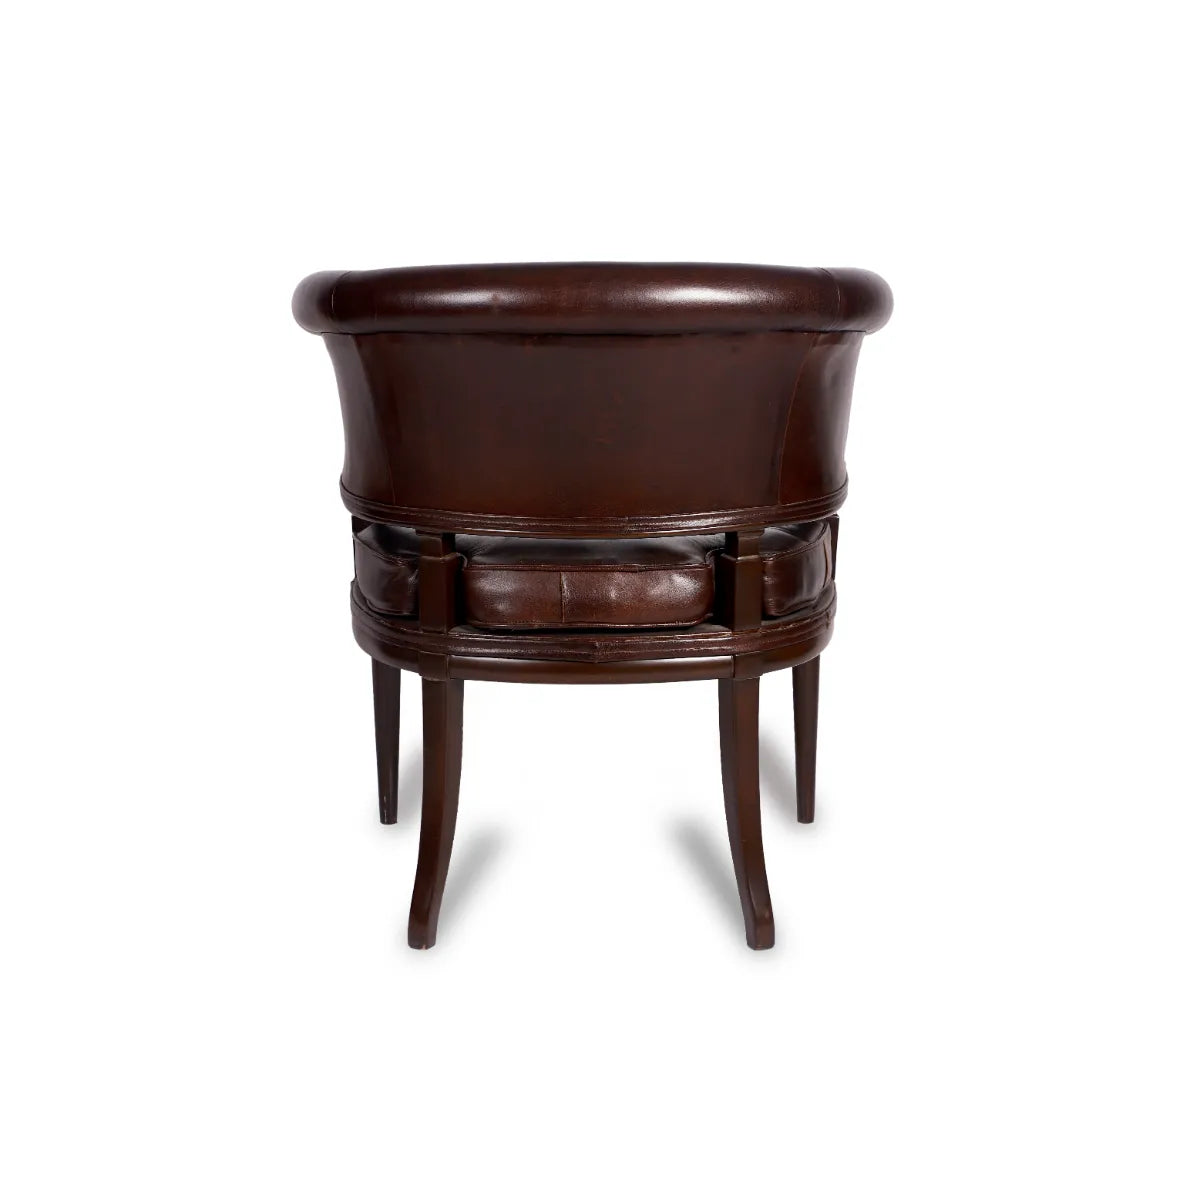 Premium Genuine Leather Chair In Brown Colour